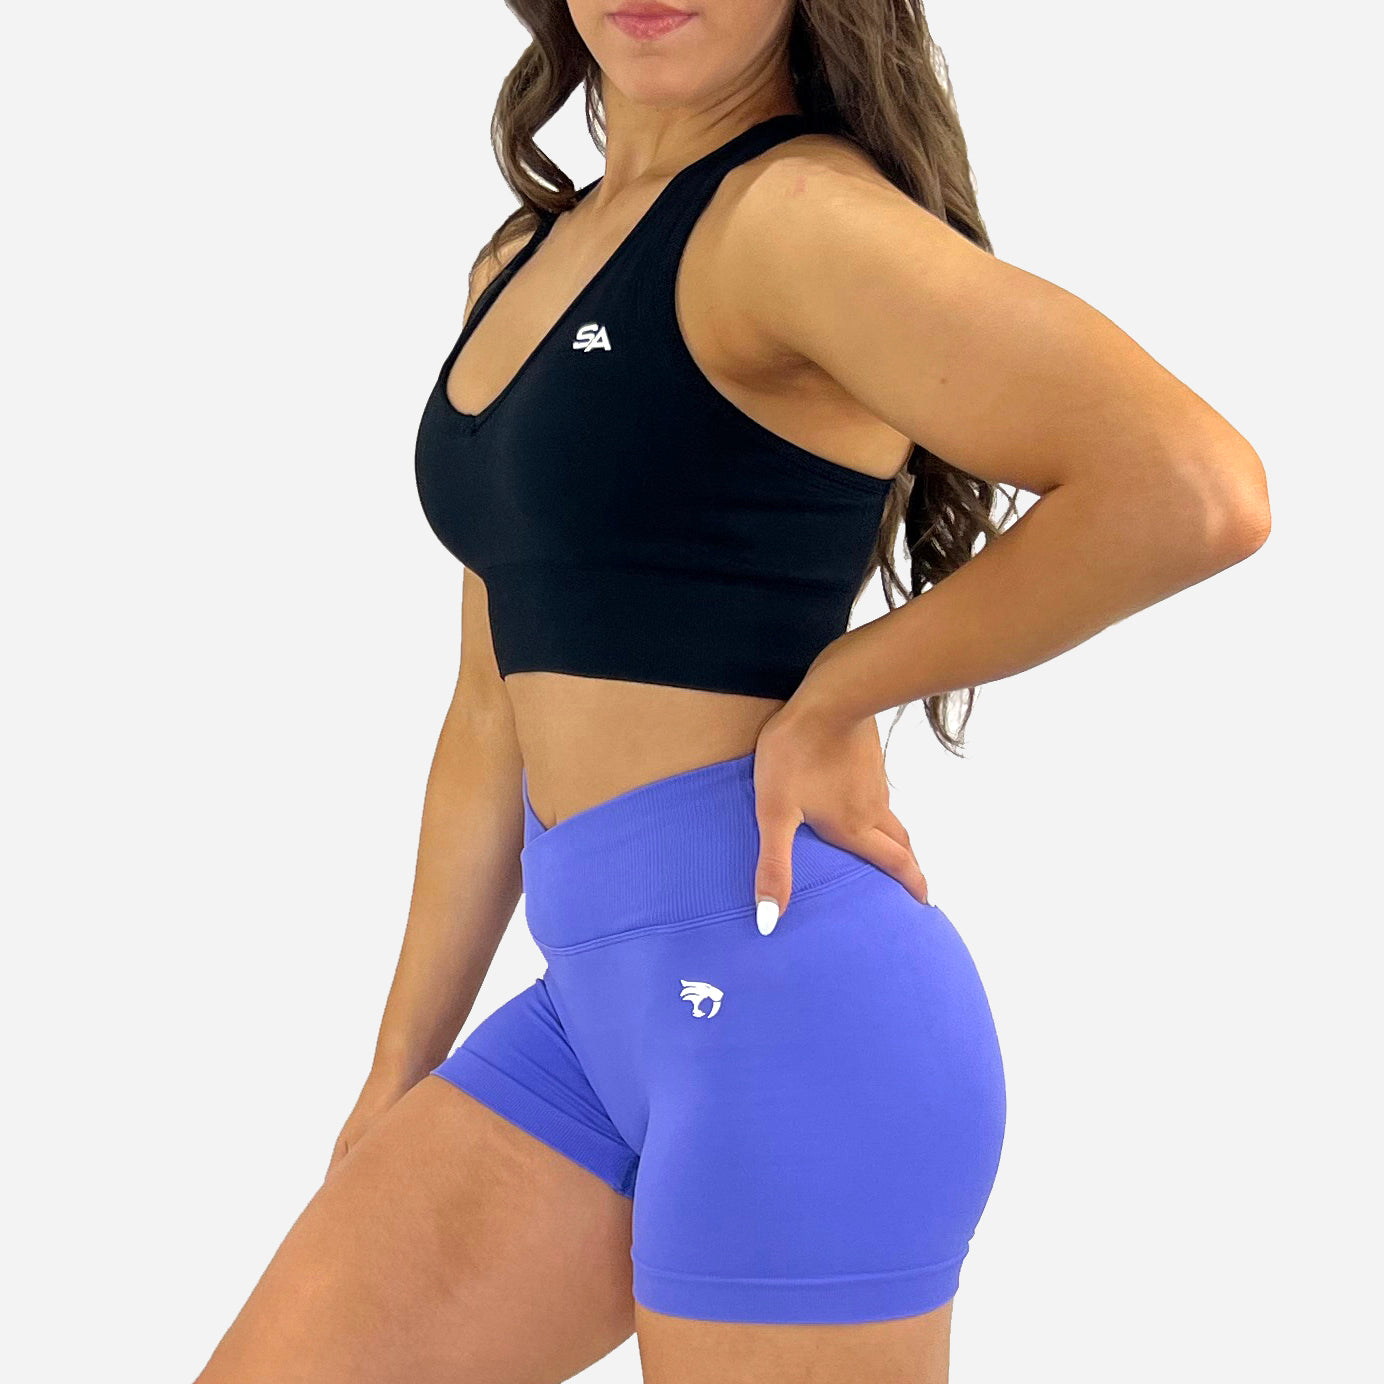 eczipvz Womens Leggings Women's High Waist Yoga Shorts Tummy Control  Workout Running Biker Volleyball Shorts for Women with Side Pockets XL,Wine  